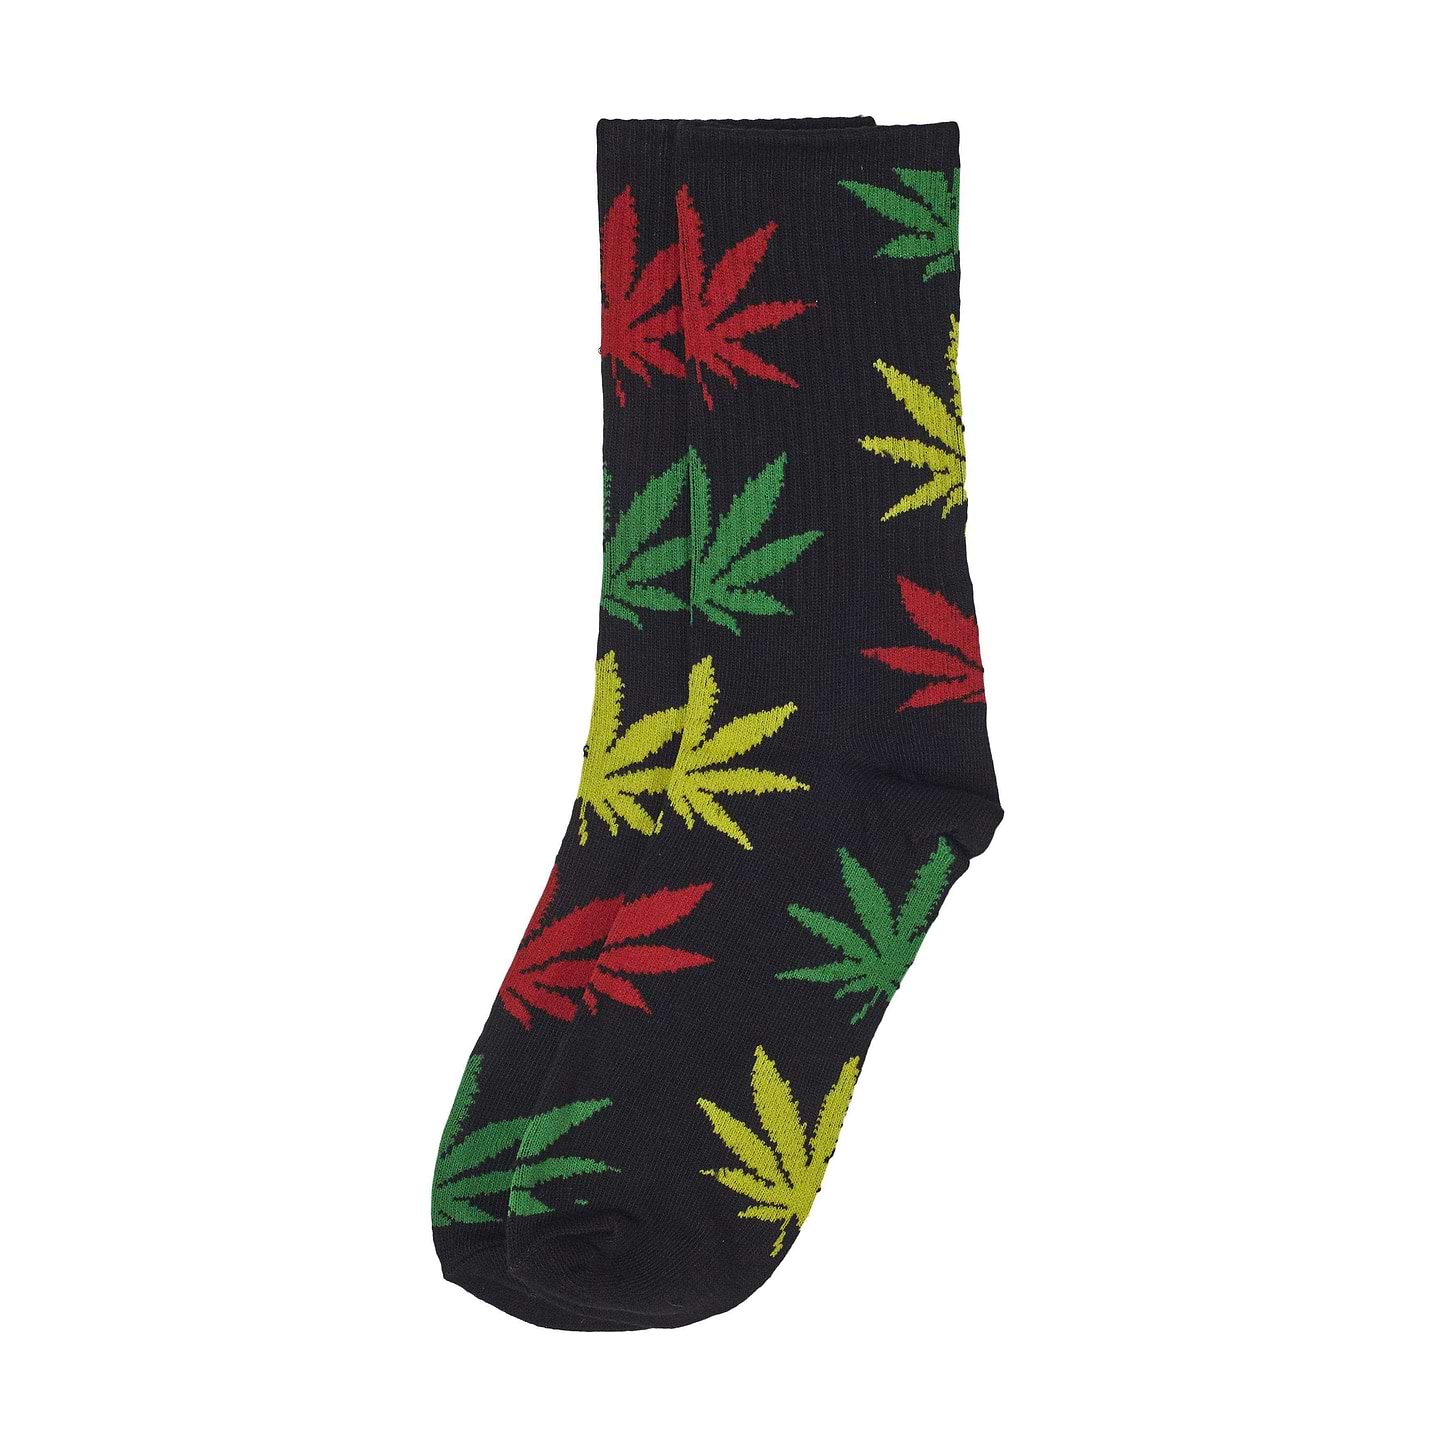 A pair of colorful adult socks footwear with funky rasta weed leaf design